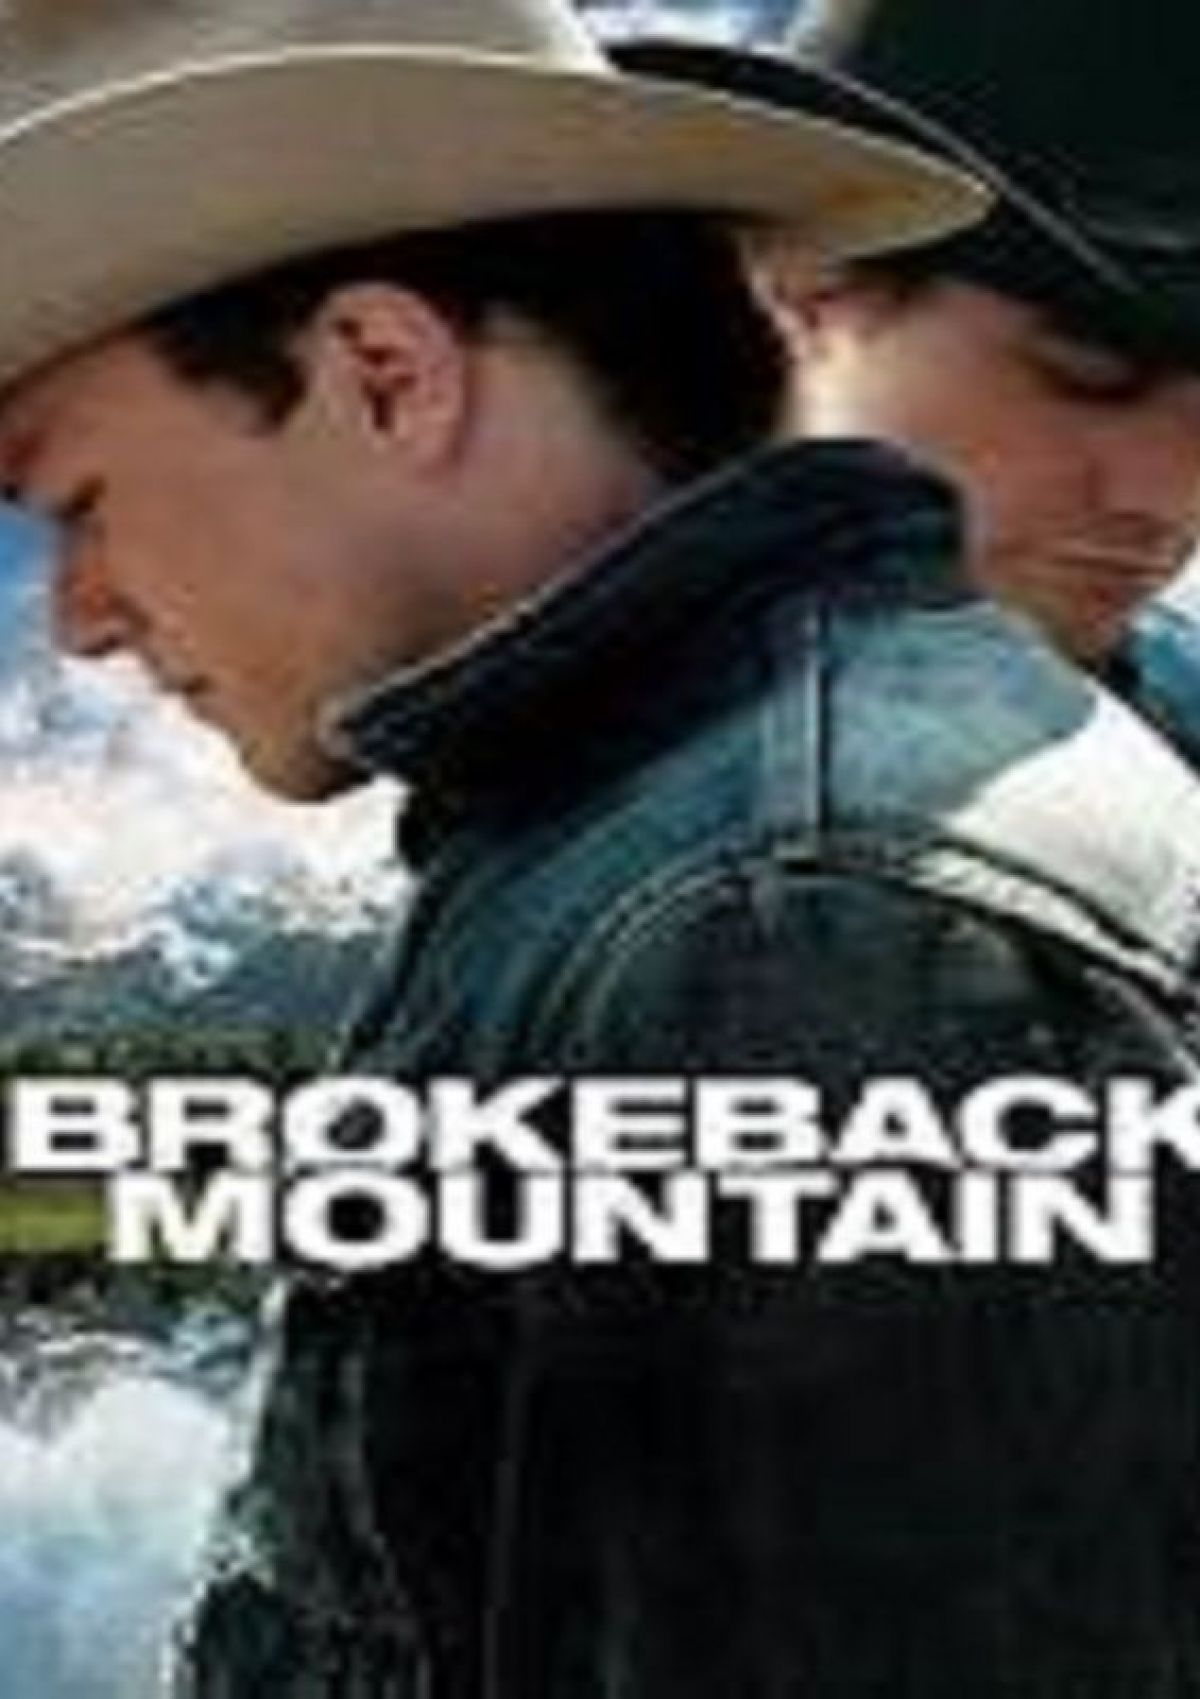 Brokeback mountain